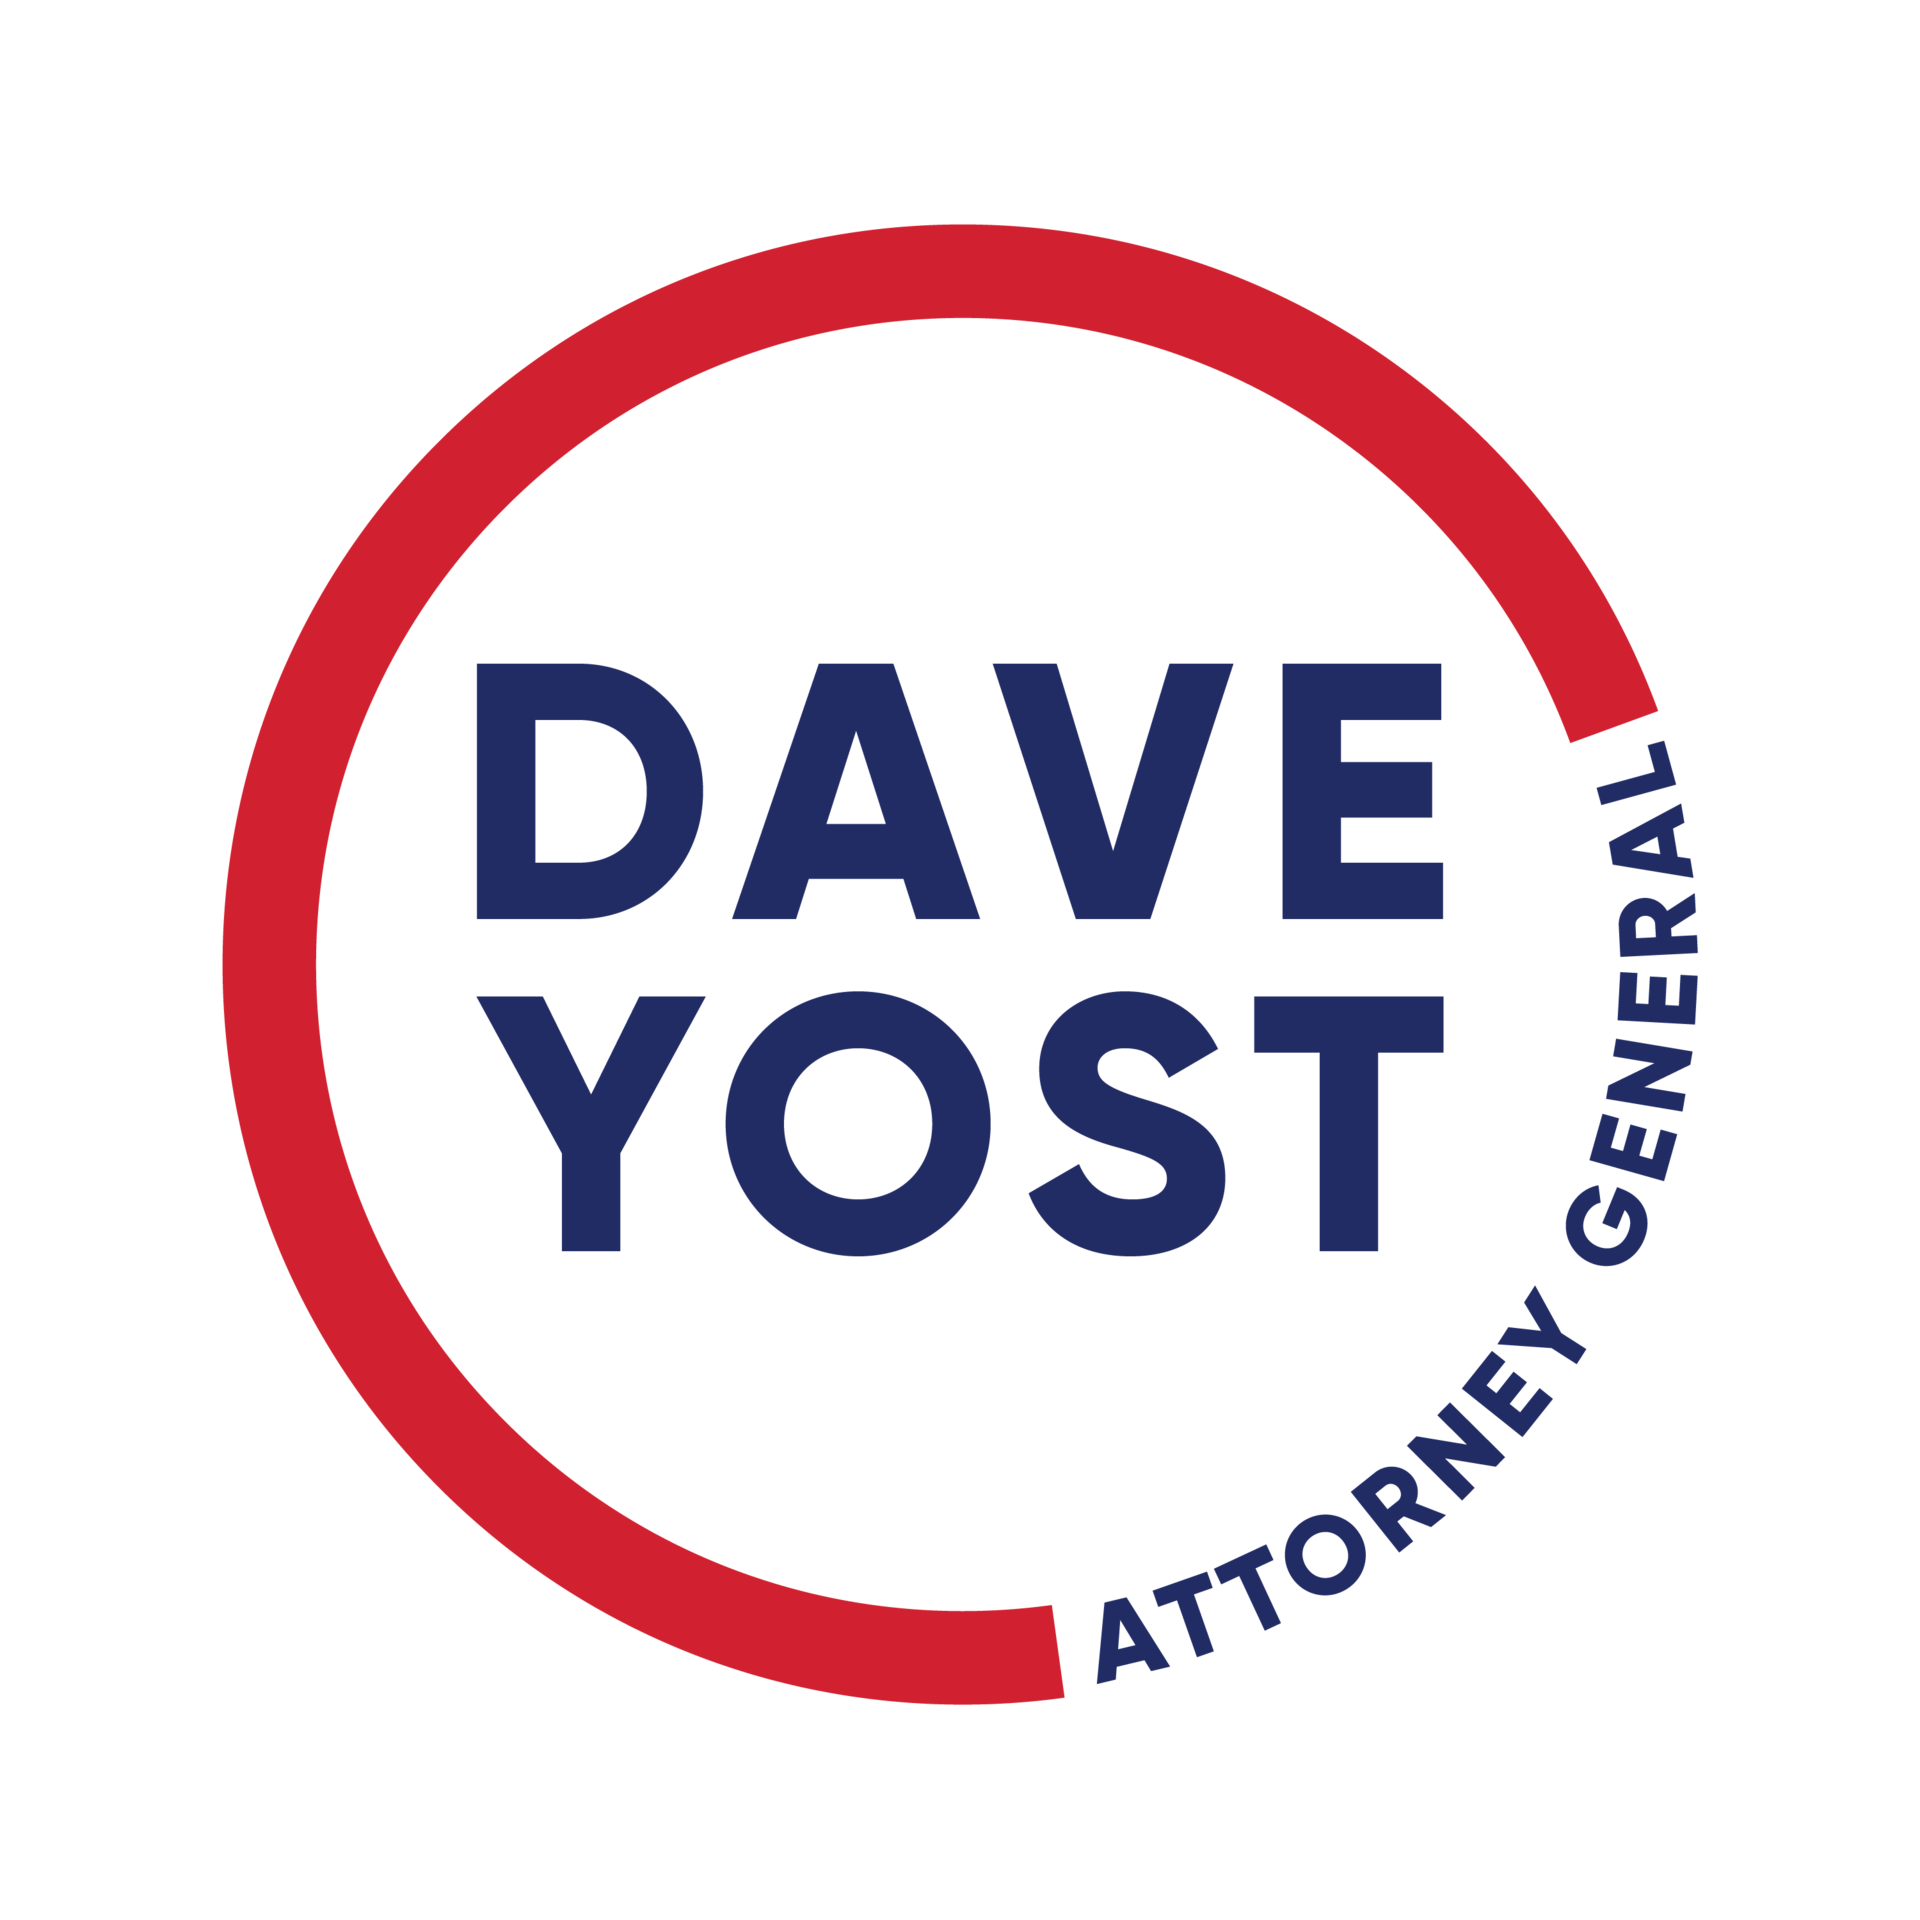 Yost logo